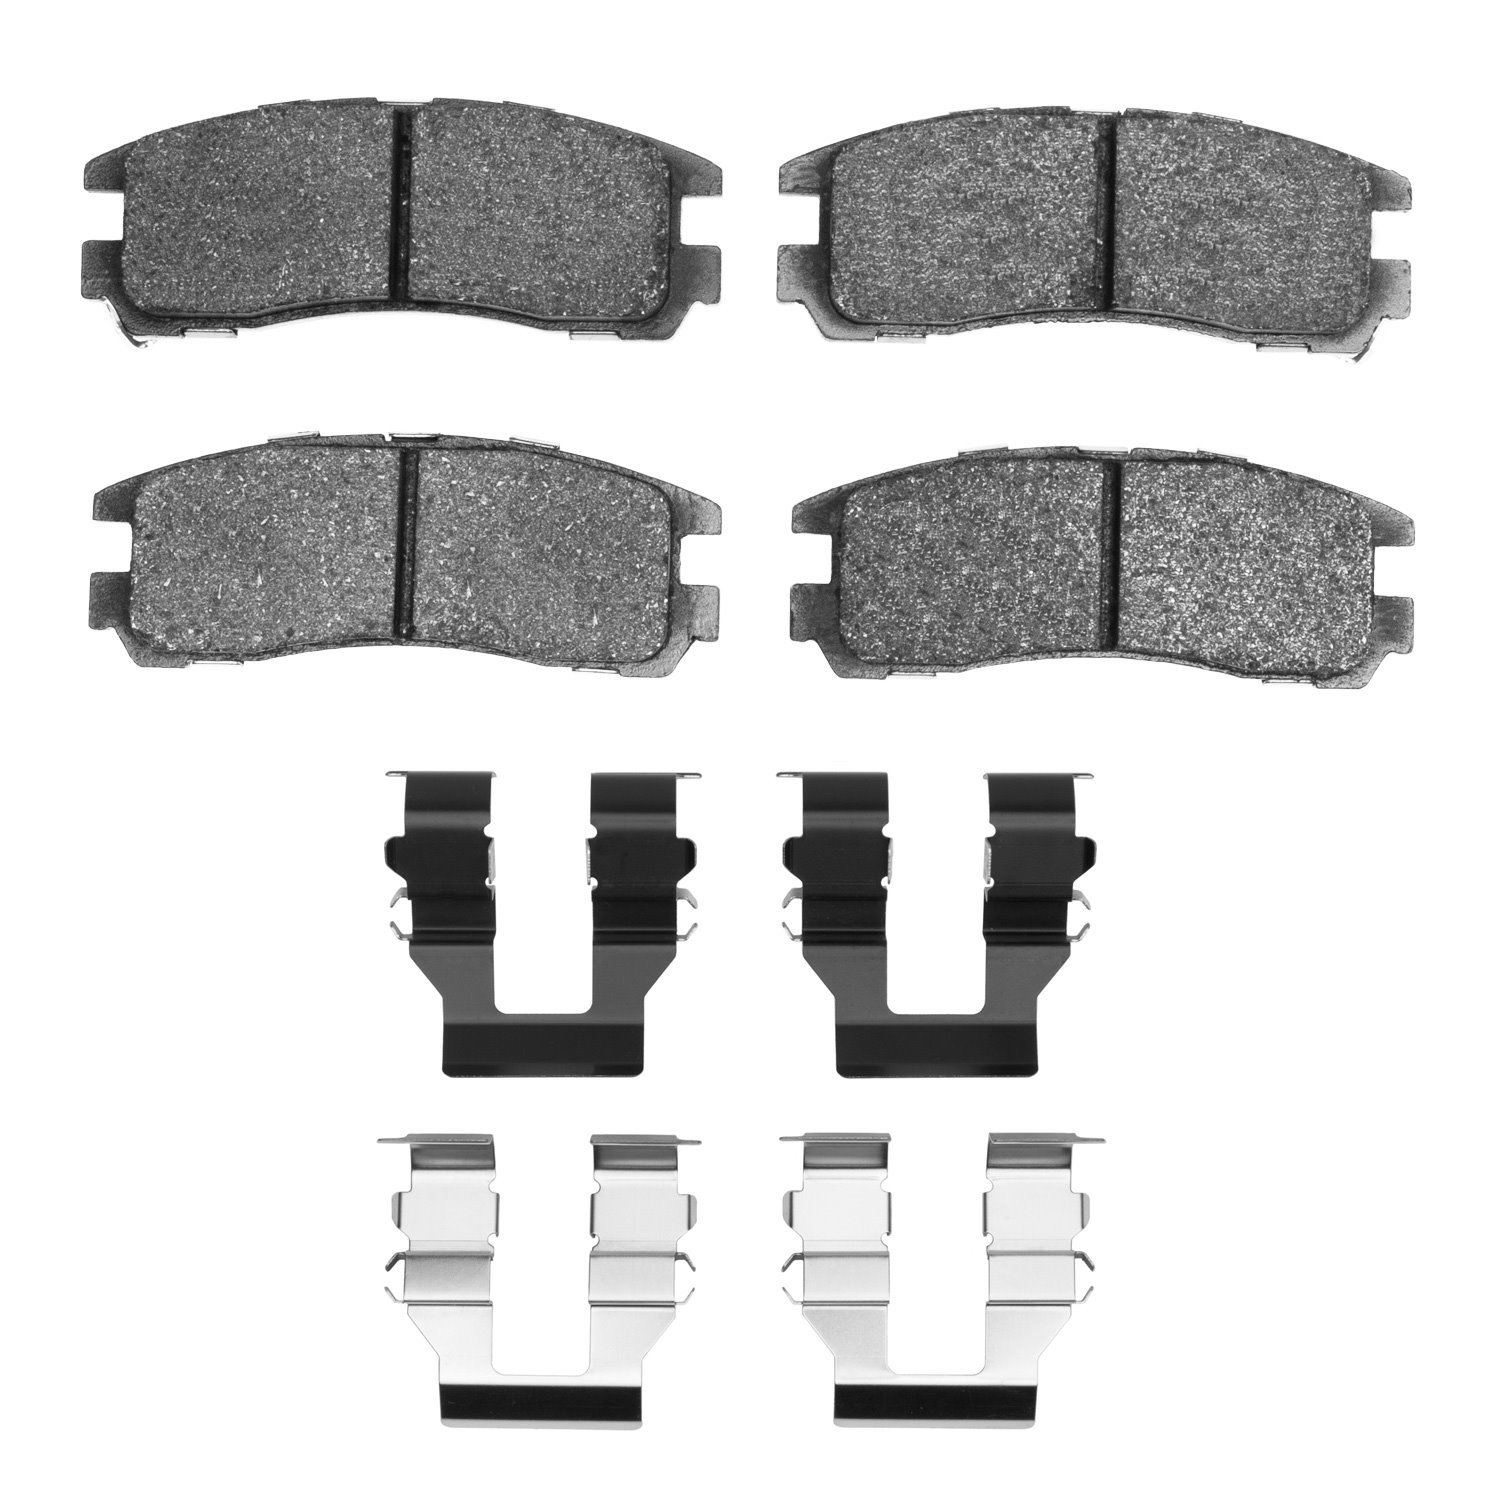 Ceramic Brake Pads & Hardware Kit, 1992-2012 Fits Multiple Makes/Models, Position: Rear